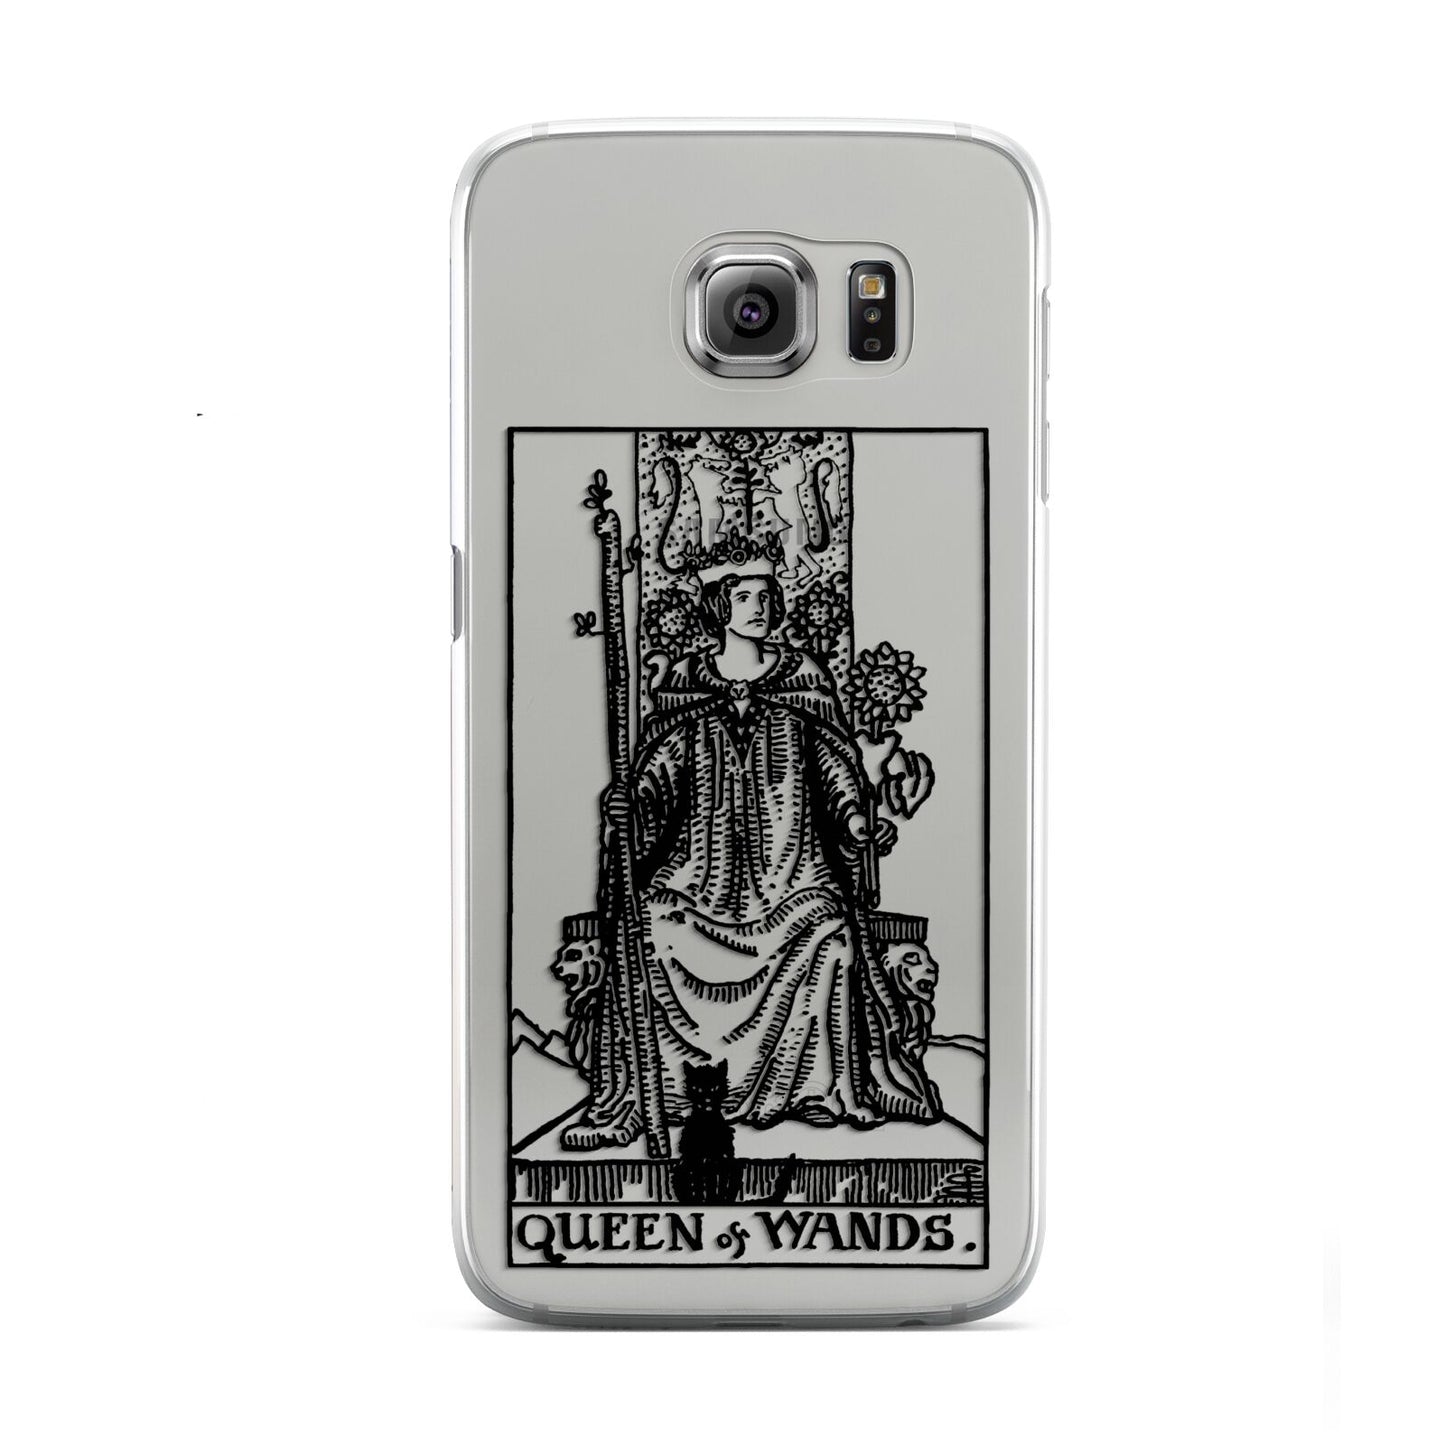 Queen of Wands Monochrome Samsung Galaxy S6 Case